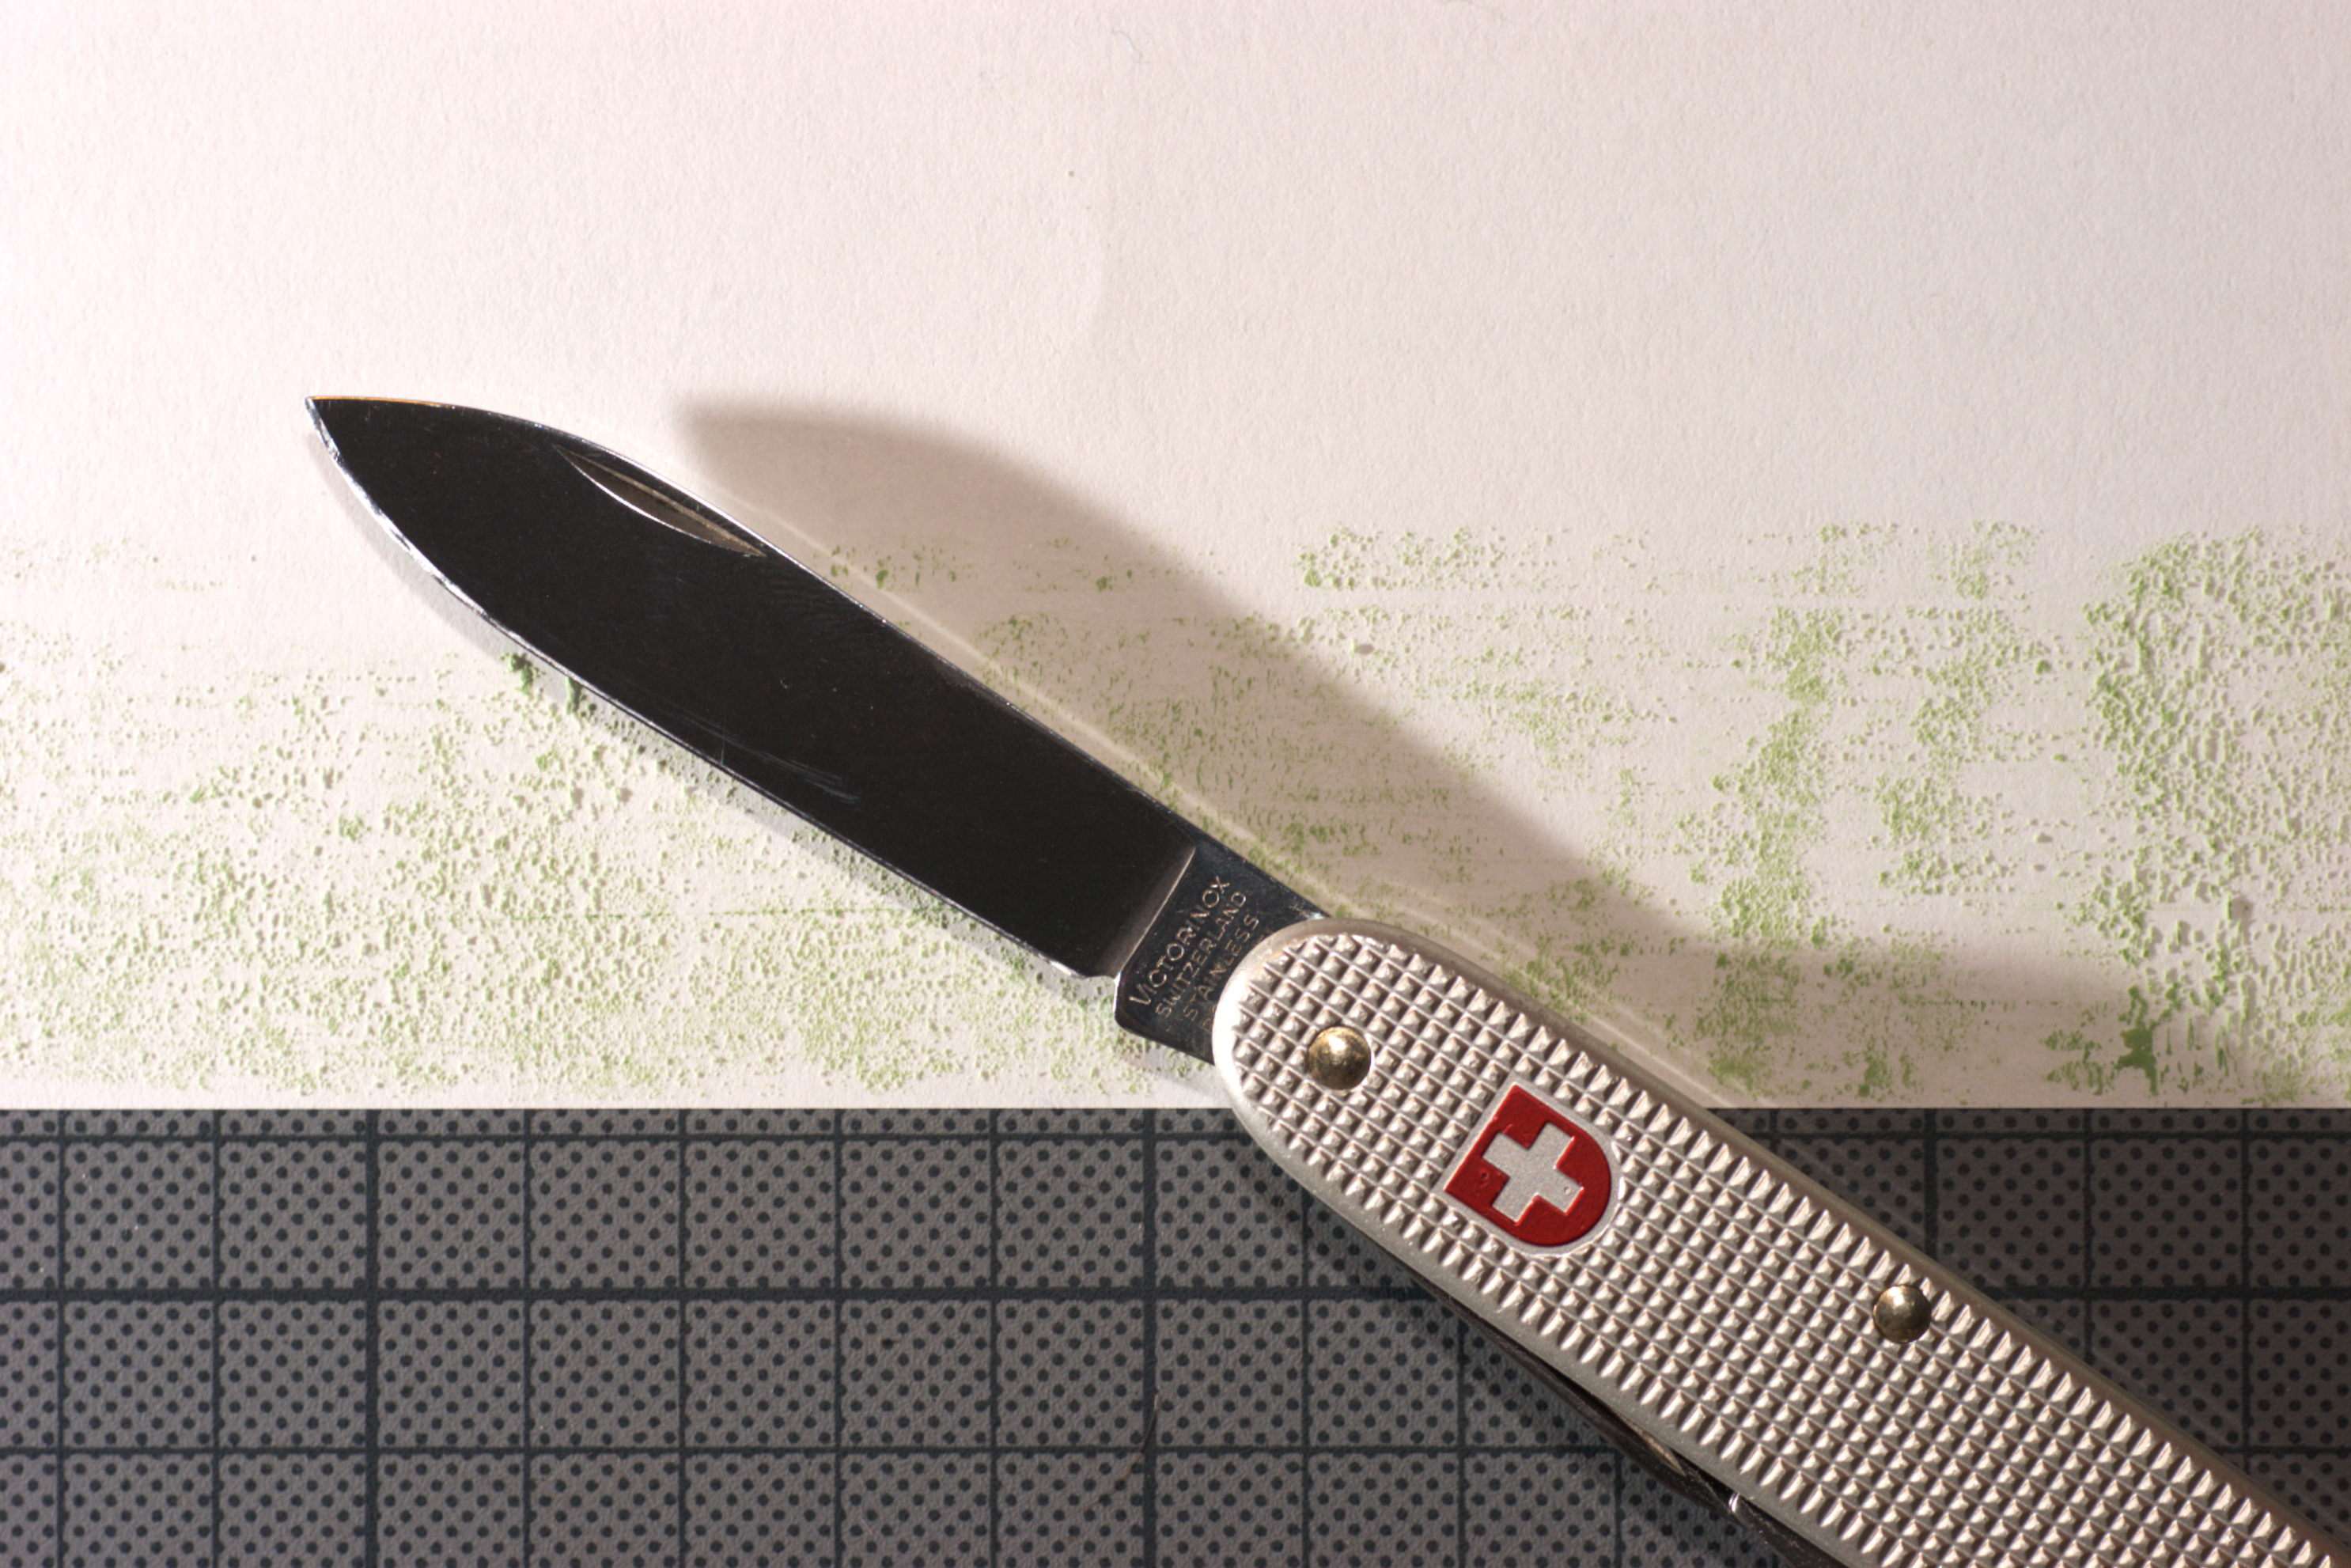 File:Sharpening knive with polishing paste 1.jpeg - Wikimedia Commons